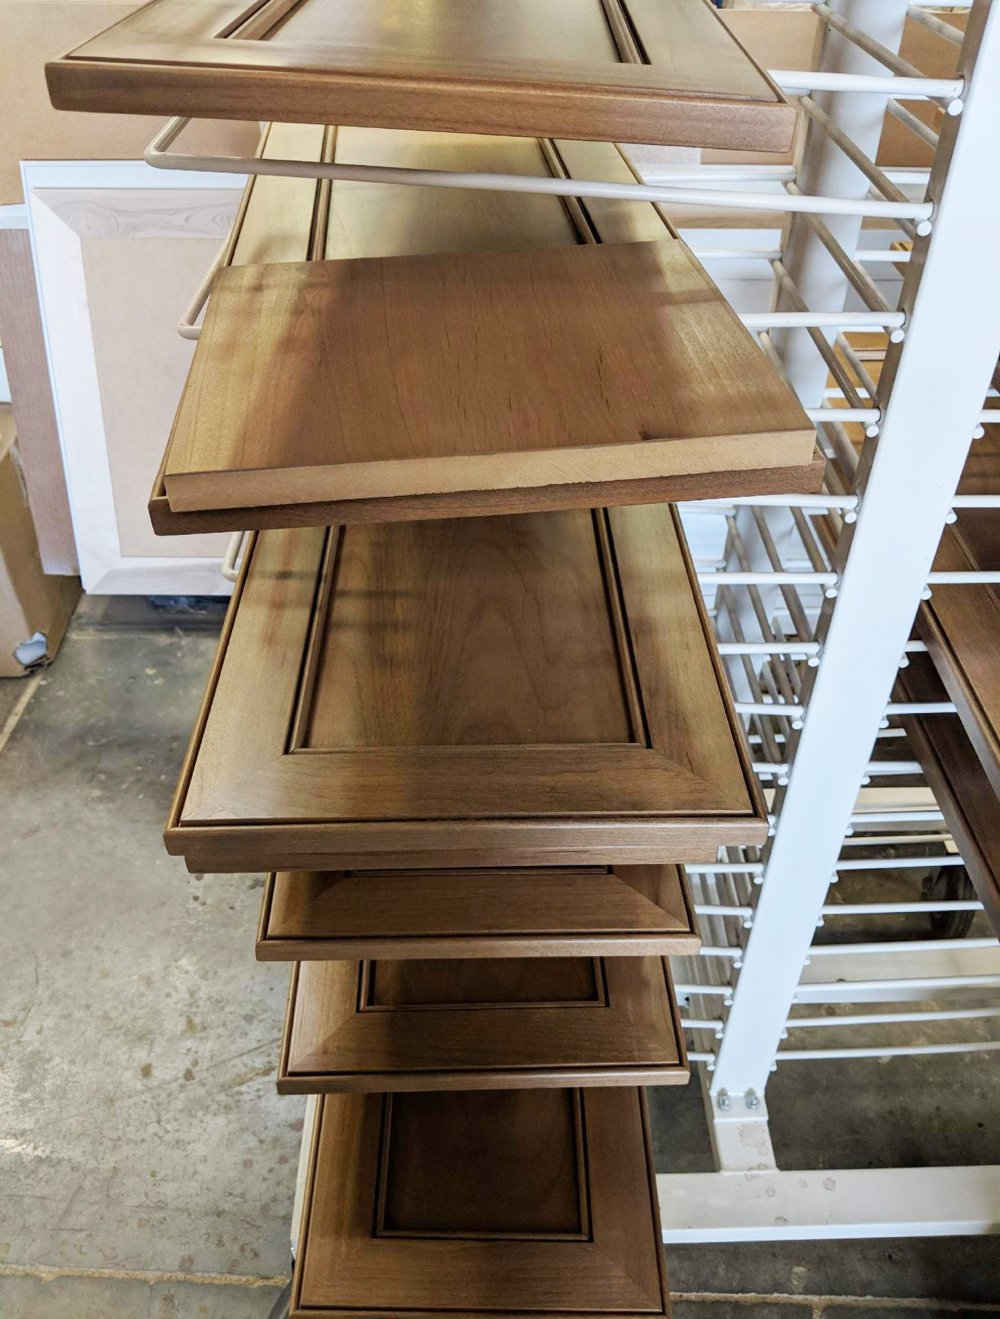 Custom Wood Cabinetry